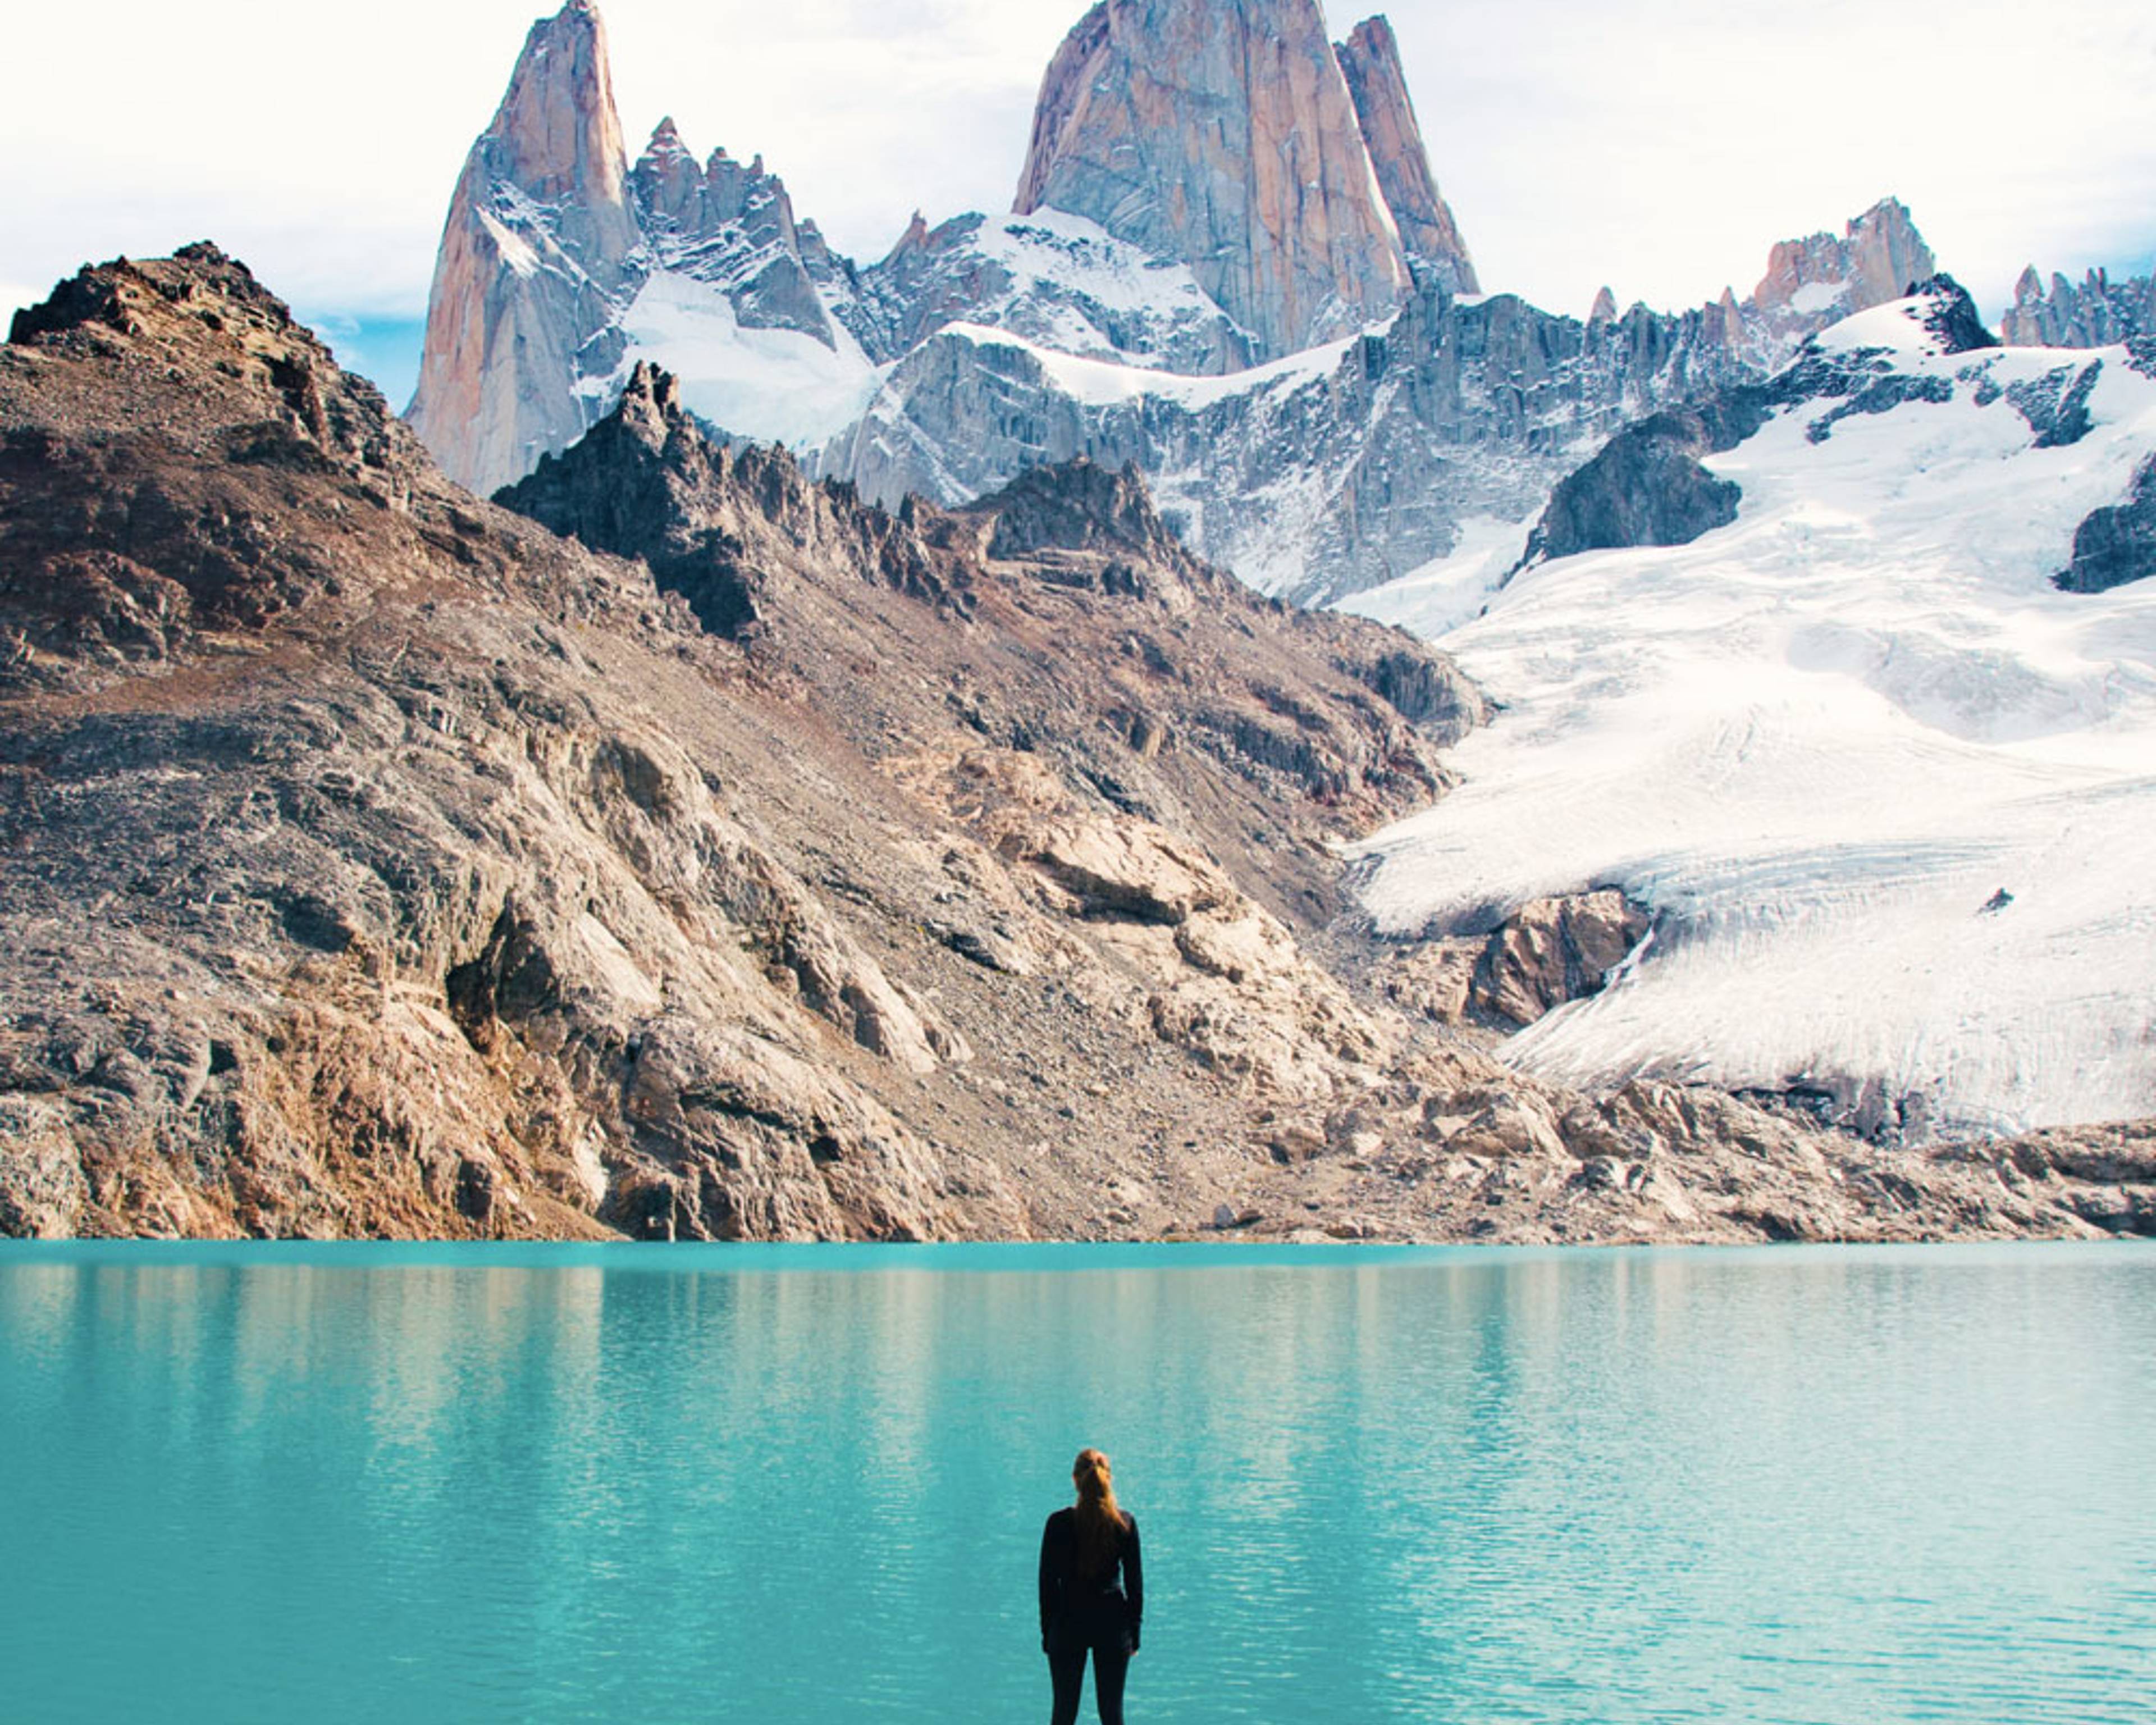 Trekking ed escursioni in Argentina 100% su misura